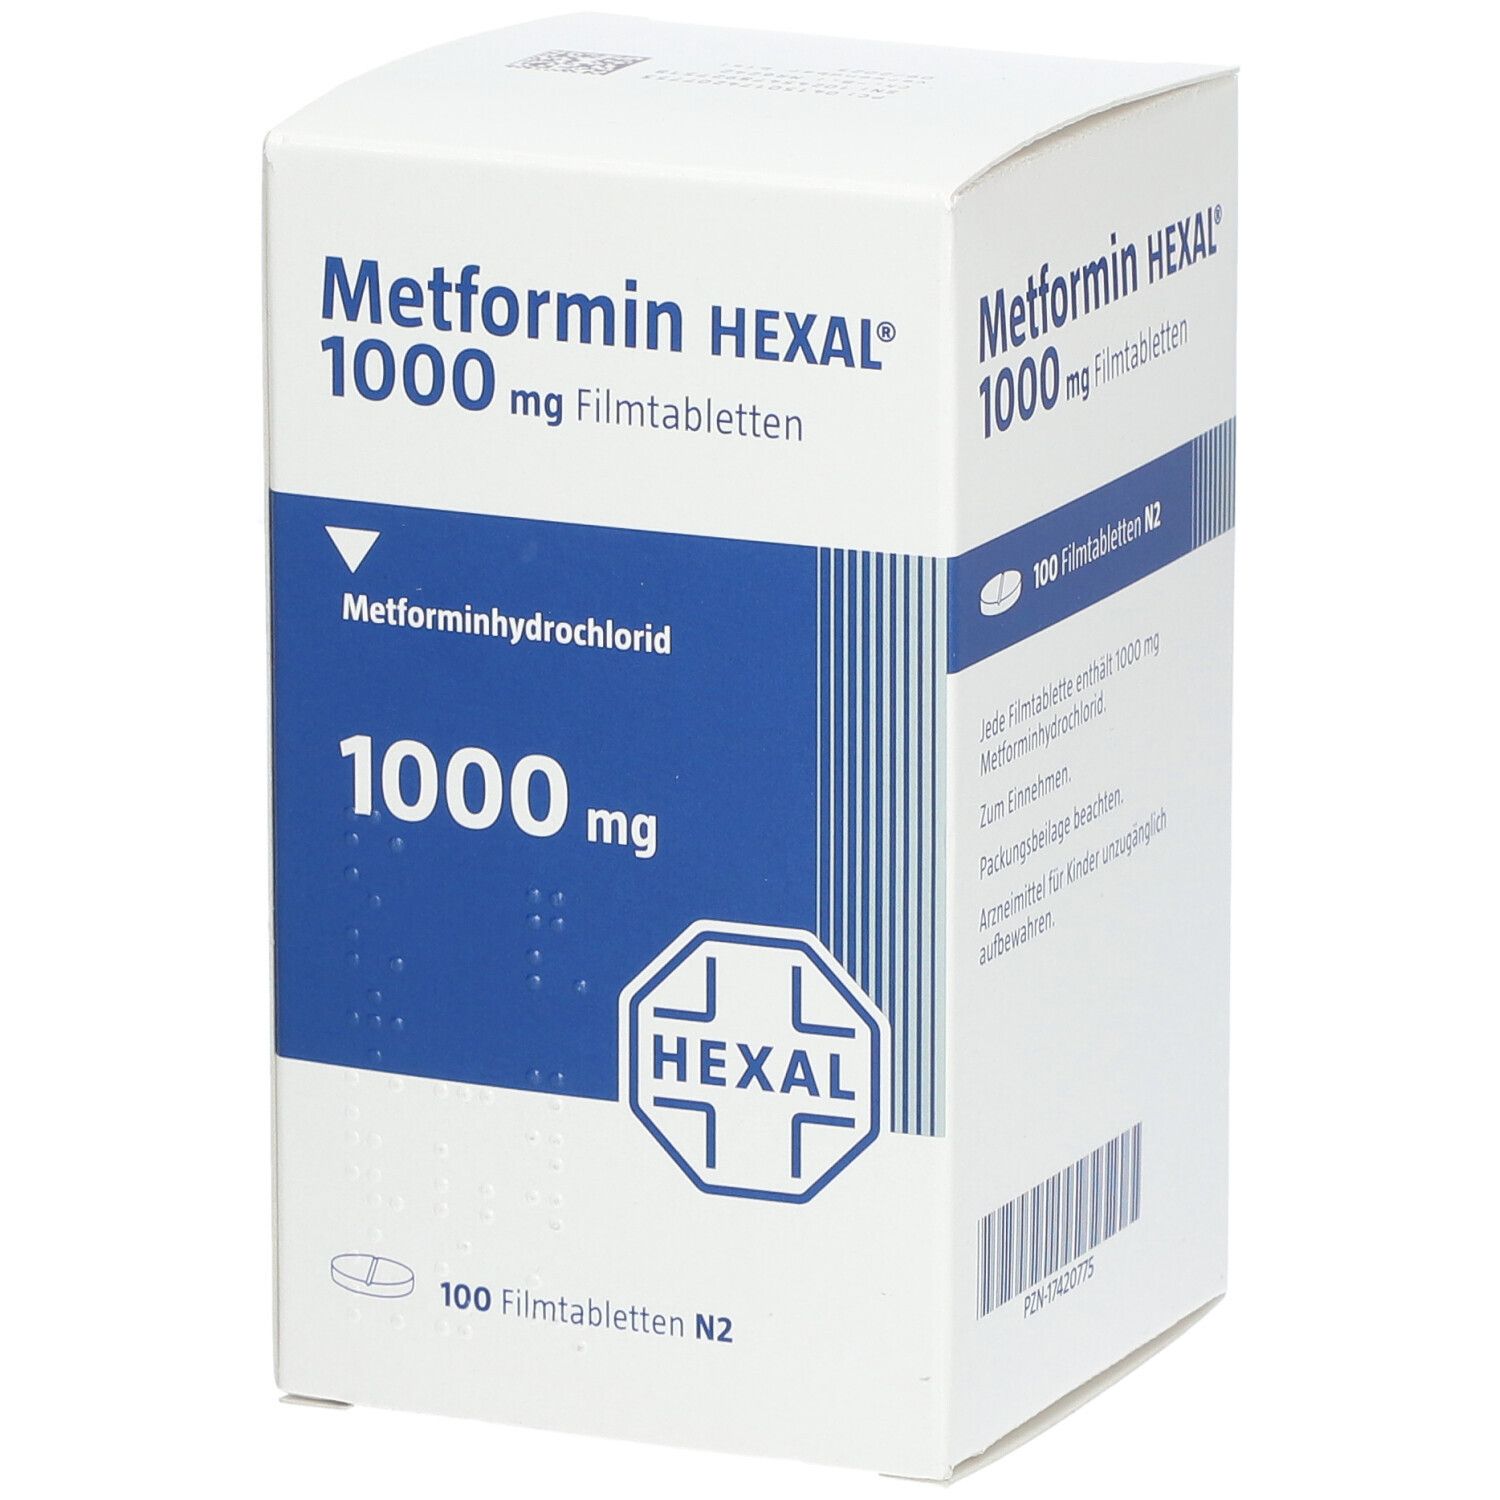 Metformin Hexal 1000 Mg Filmtabletten Dose 100 St Mit Dem E Rezept Kaufen Shop Apotheke 4480